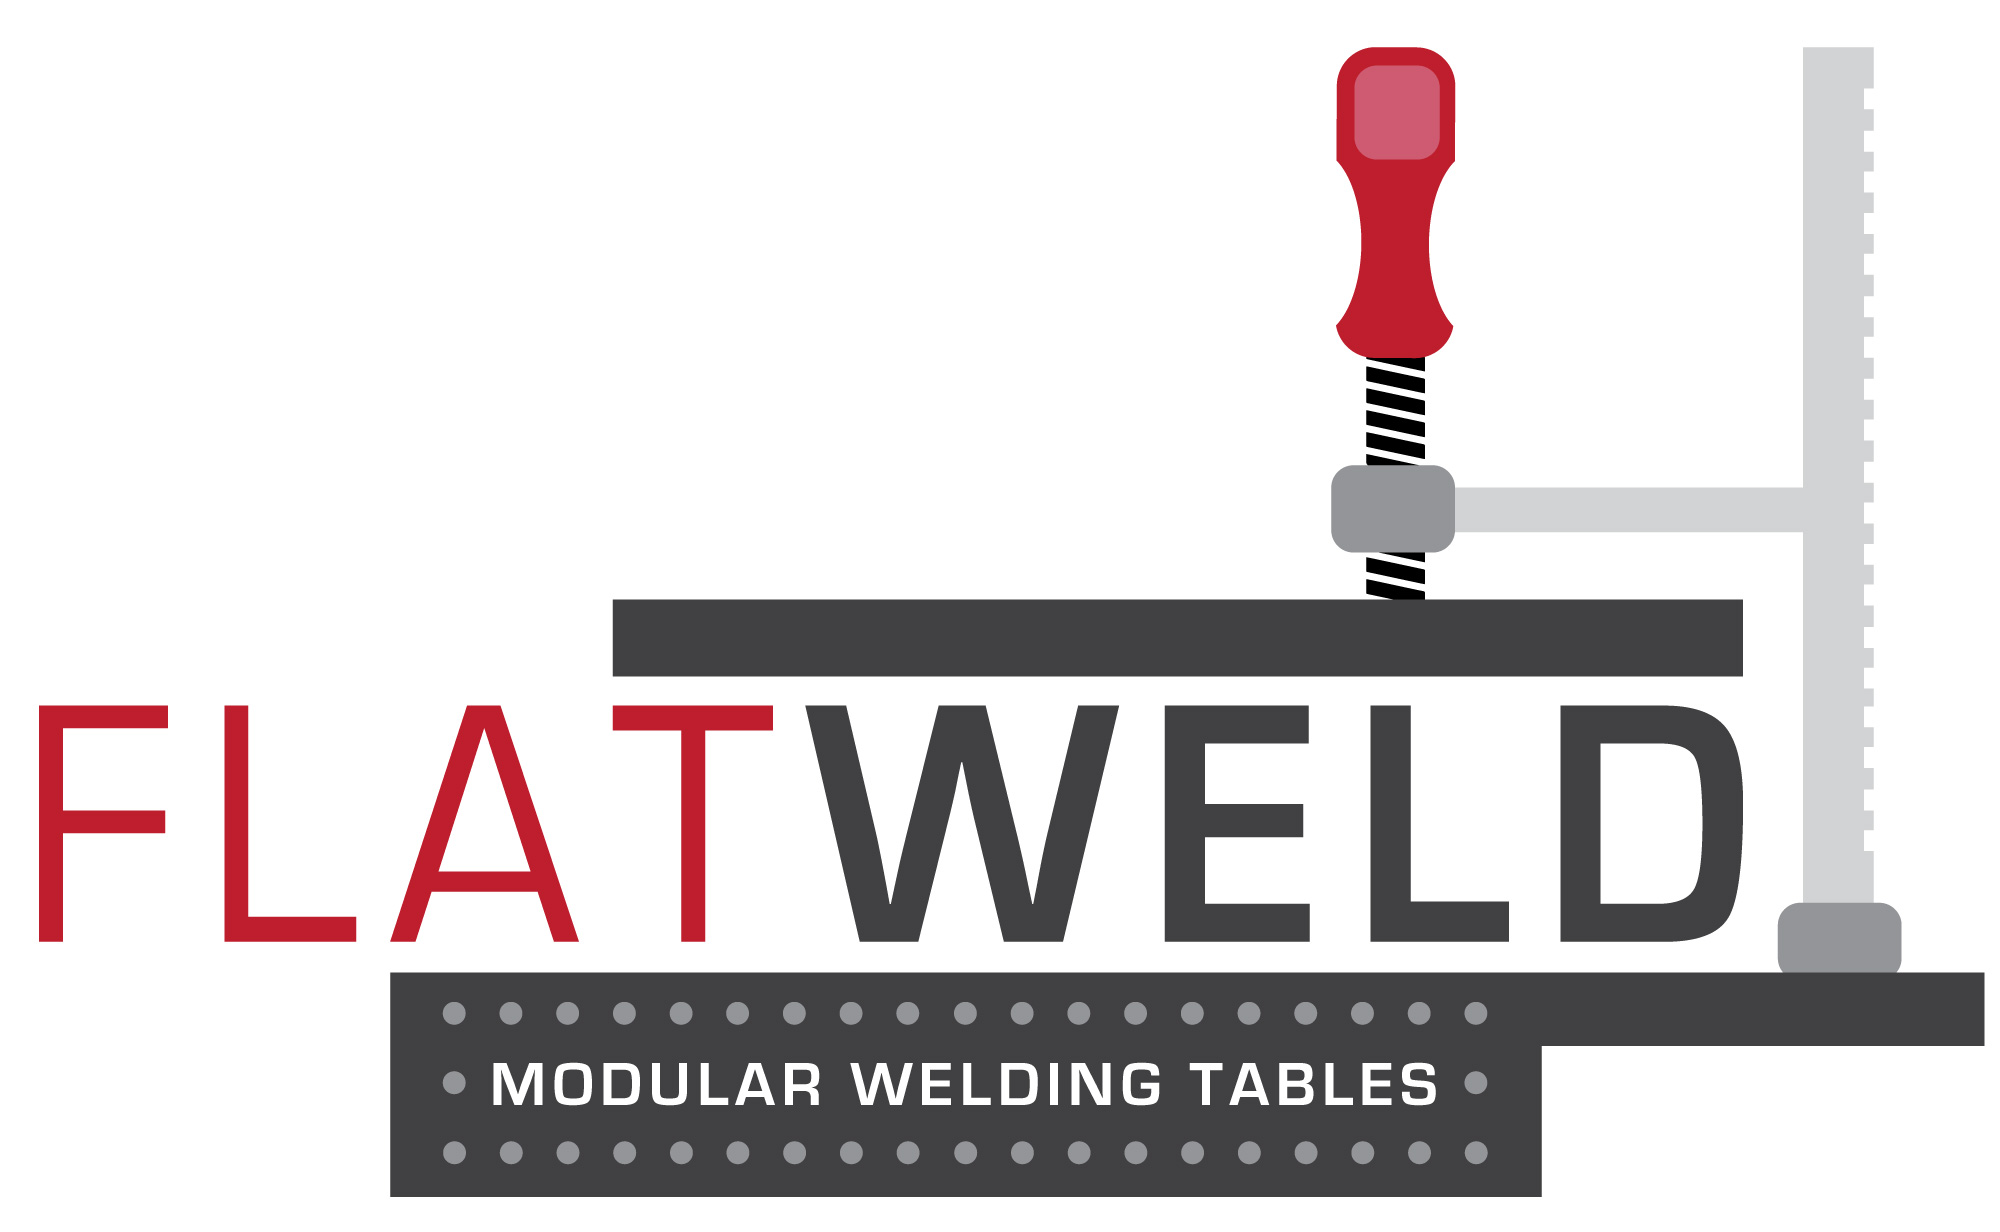 FLATWELD Modular Welding Tables made in UK